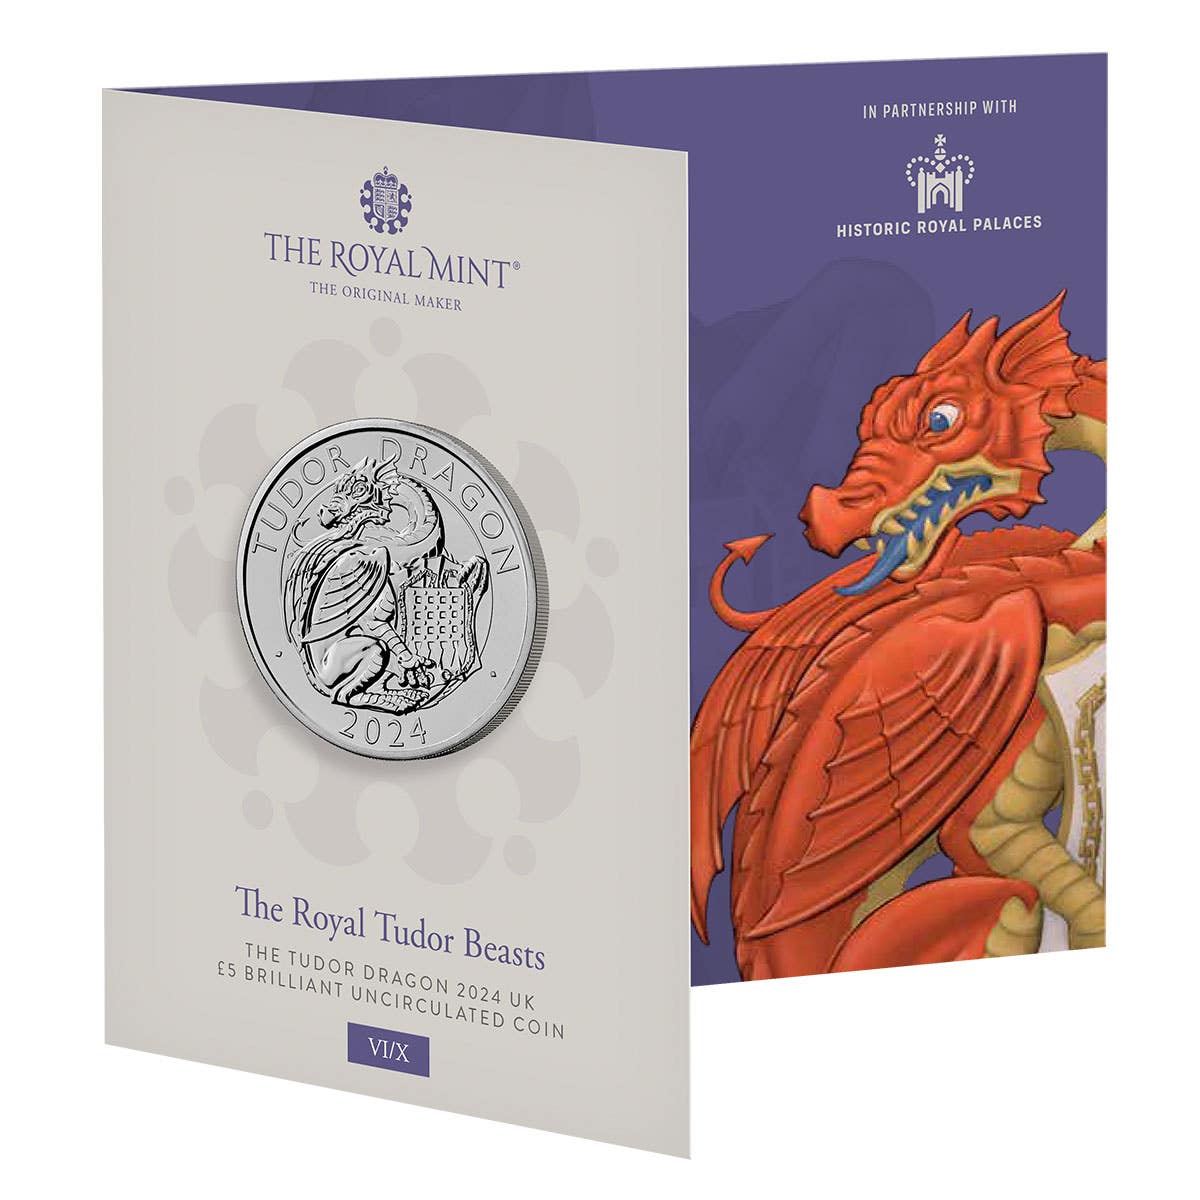 The Royal Tudor Beasts The Tudor Dragon 2024 £5 Cupro-Nickel Brilliant Uncirculated Coin